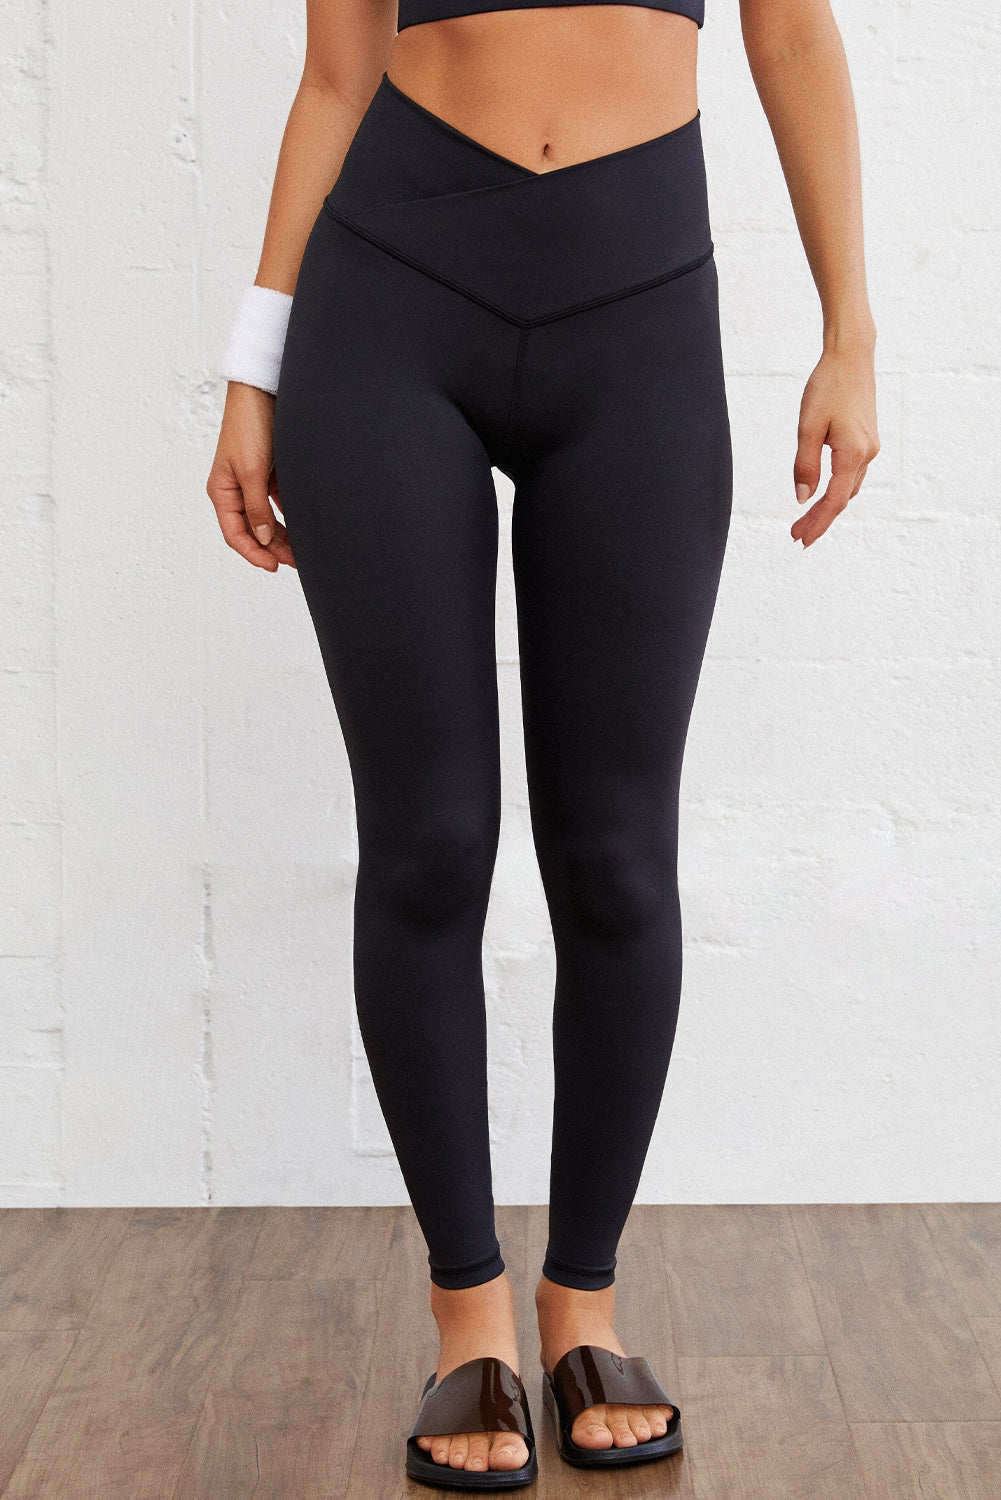 Black Arched Waist Seamless Active Leggings - L 75% Polyamide + 25% Elastane Activewear